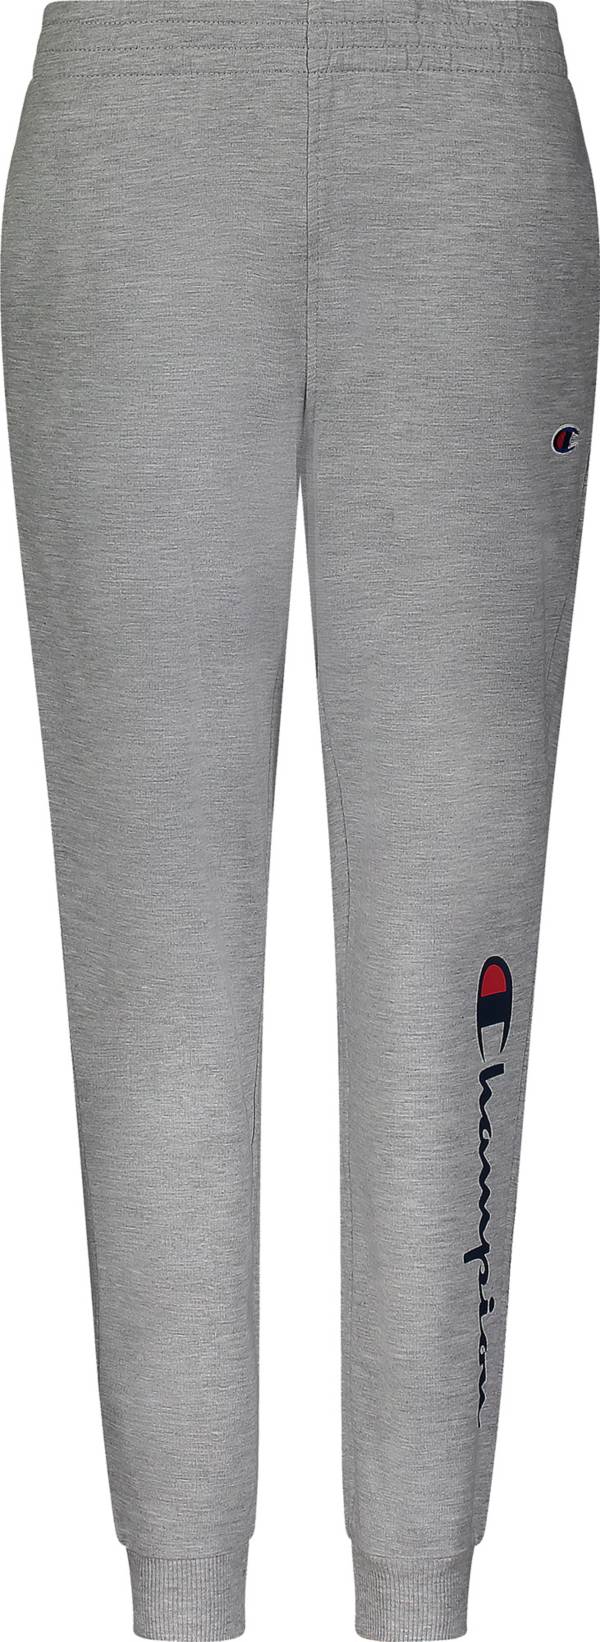 Champion Boys' Signature Fleece Jogger Pants product image